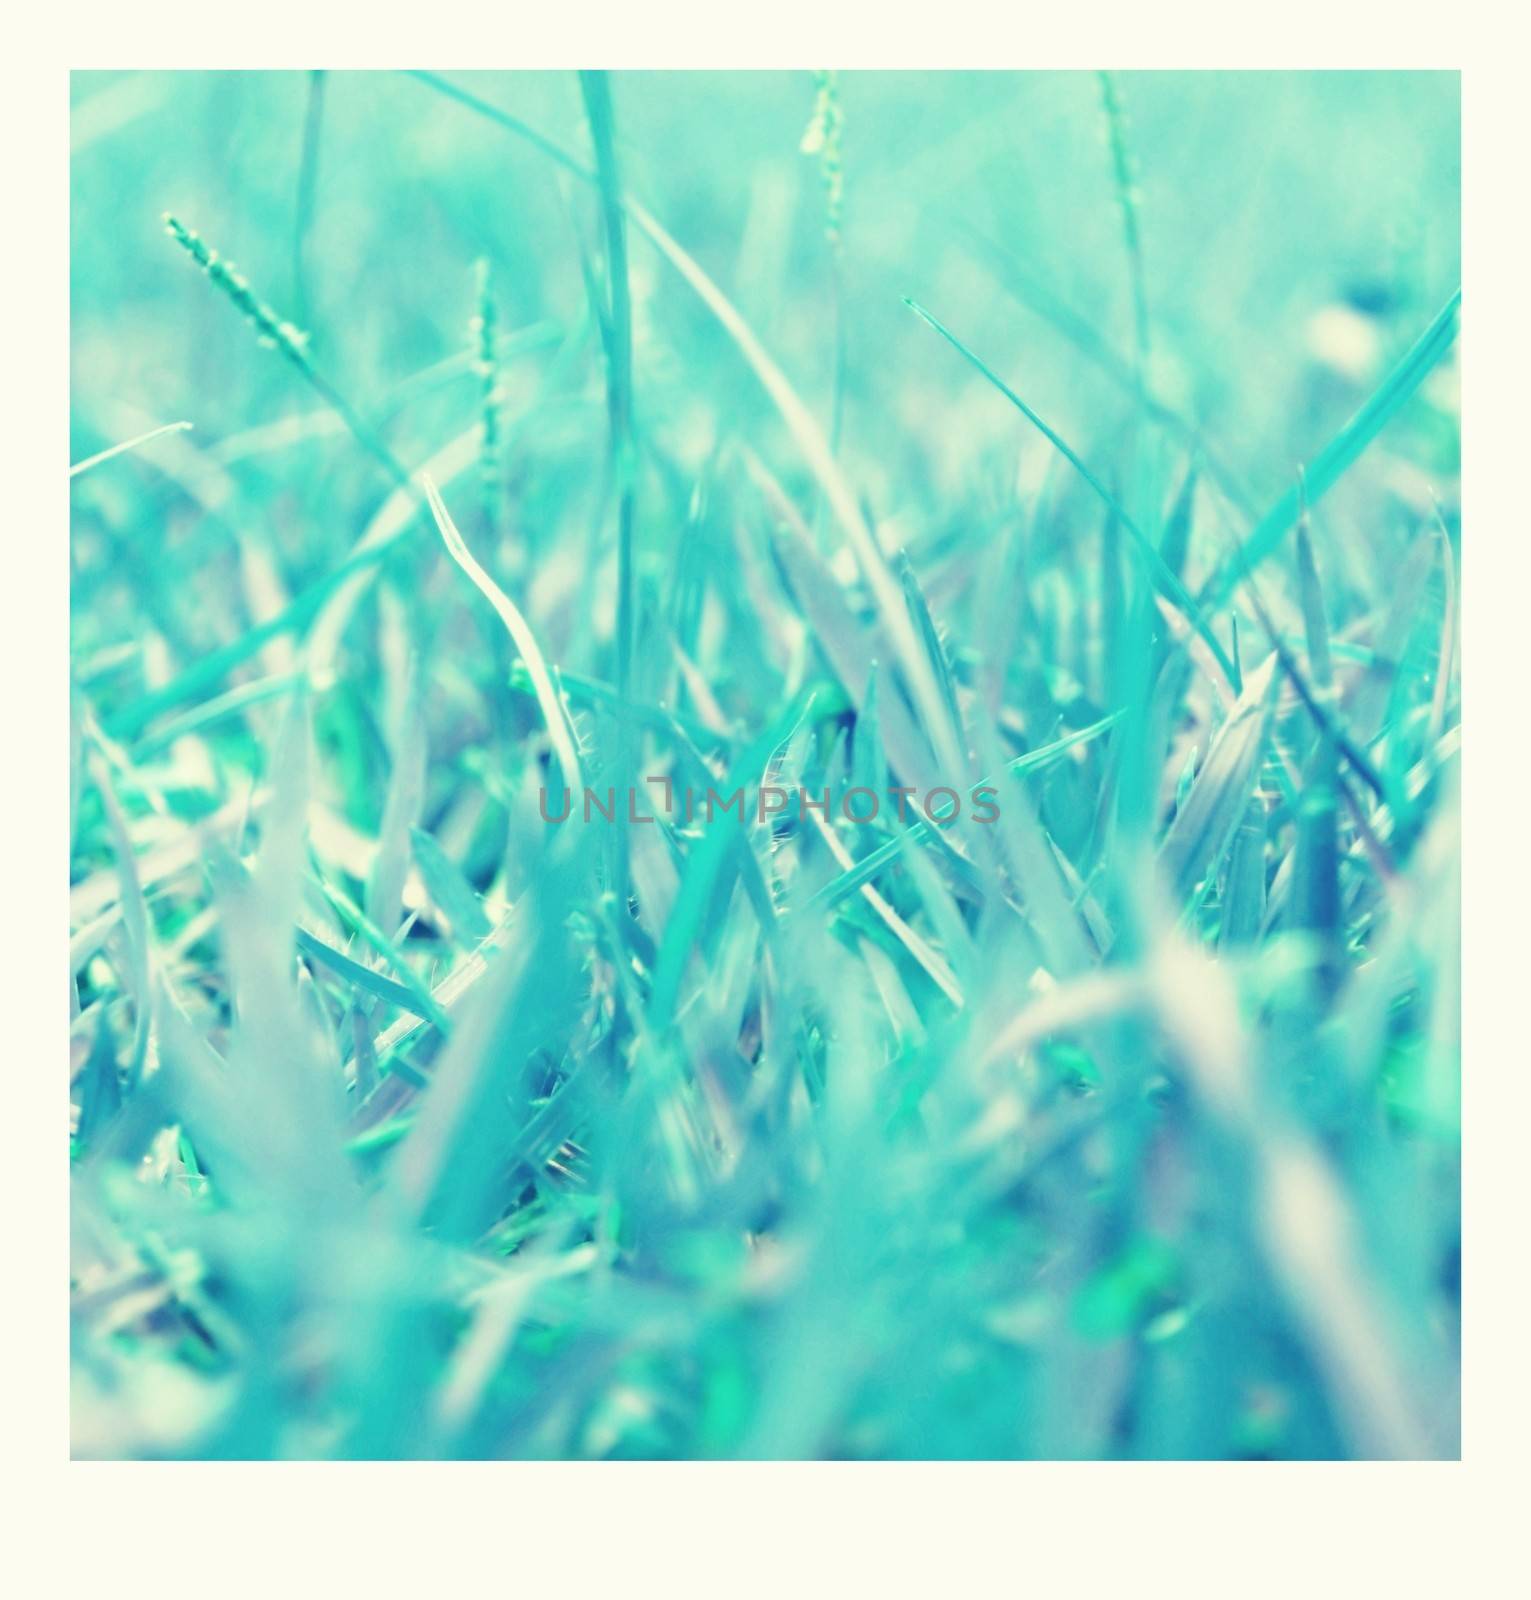 Blue grass in winter freeze. by apichart